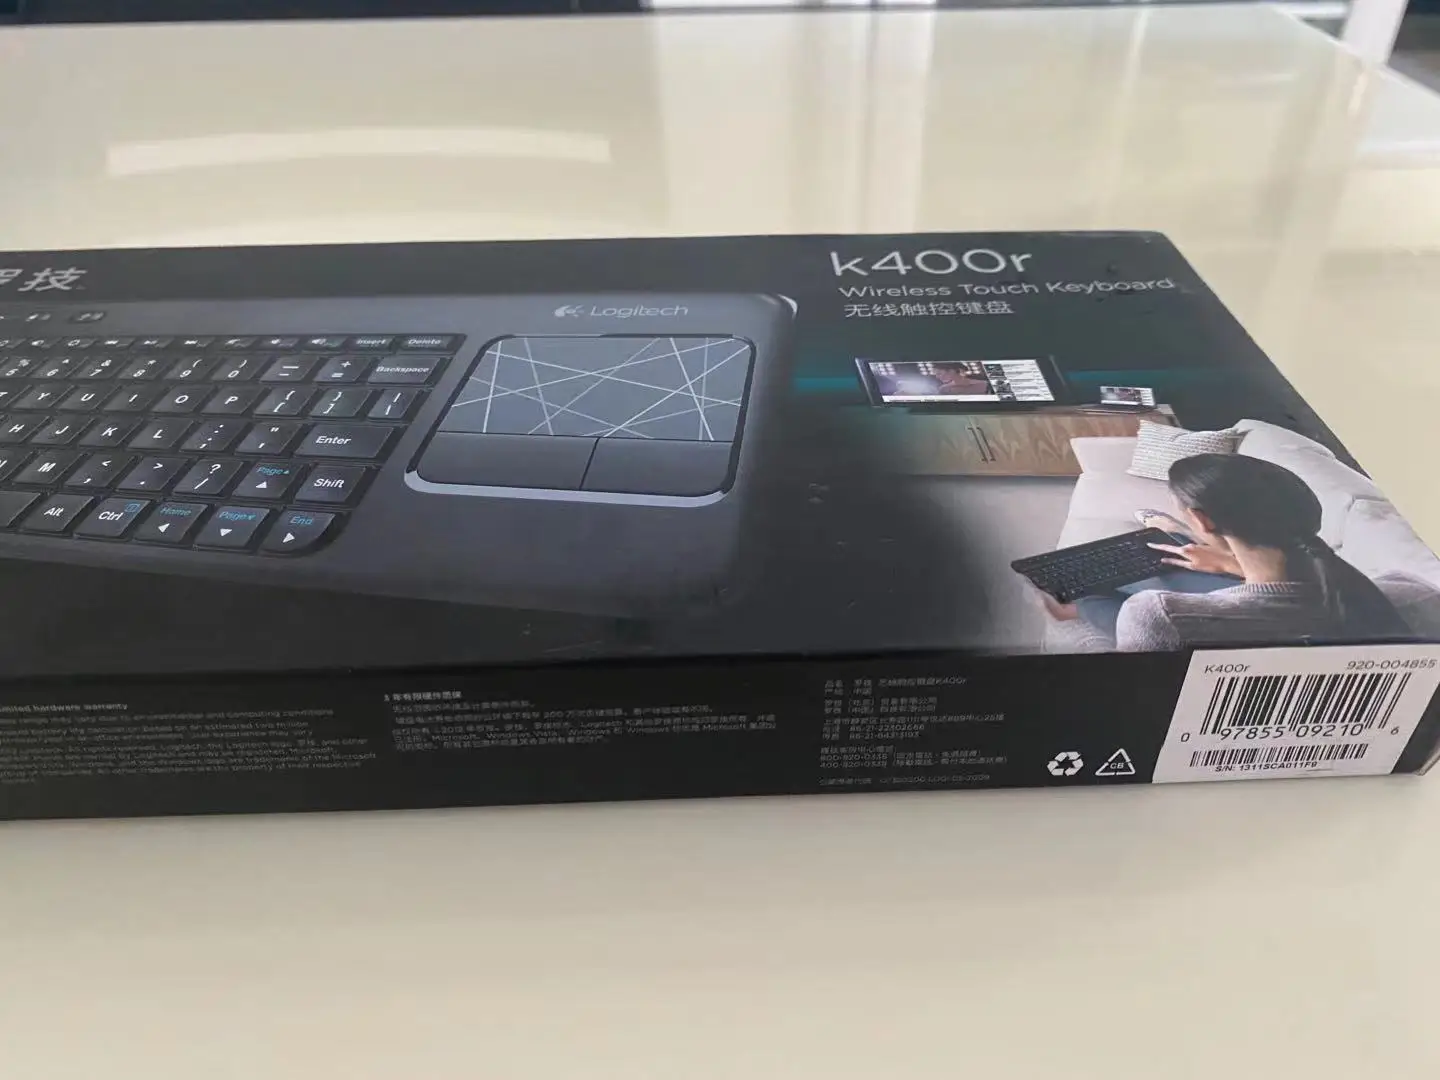 The New Classic Logitech K400r Usb Touch Keyboard Keypad Keyboards -